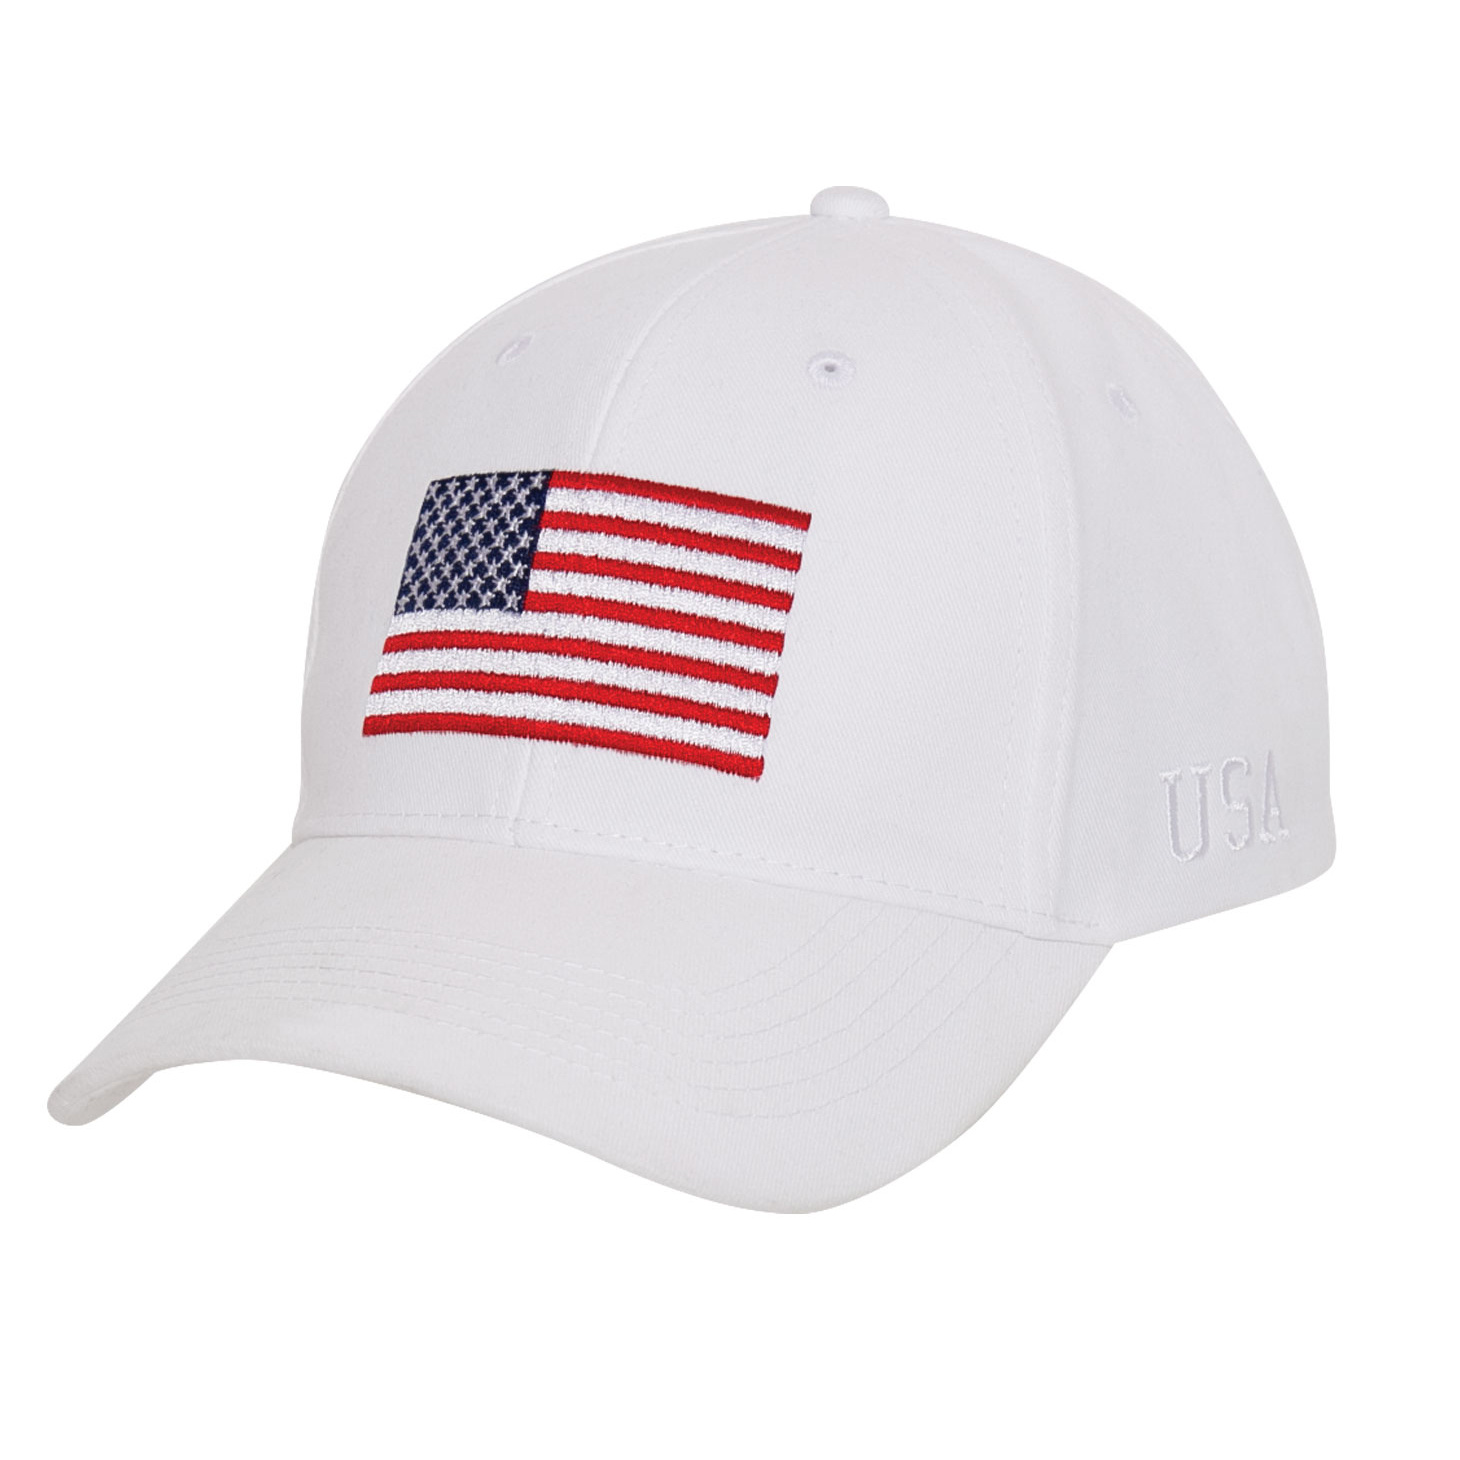 čepice baseball s barevnou vlajkou USA bílá